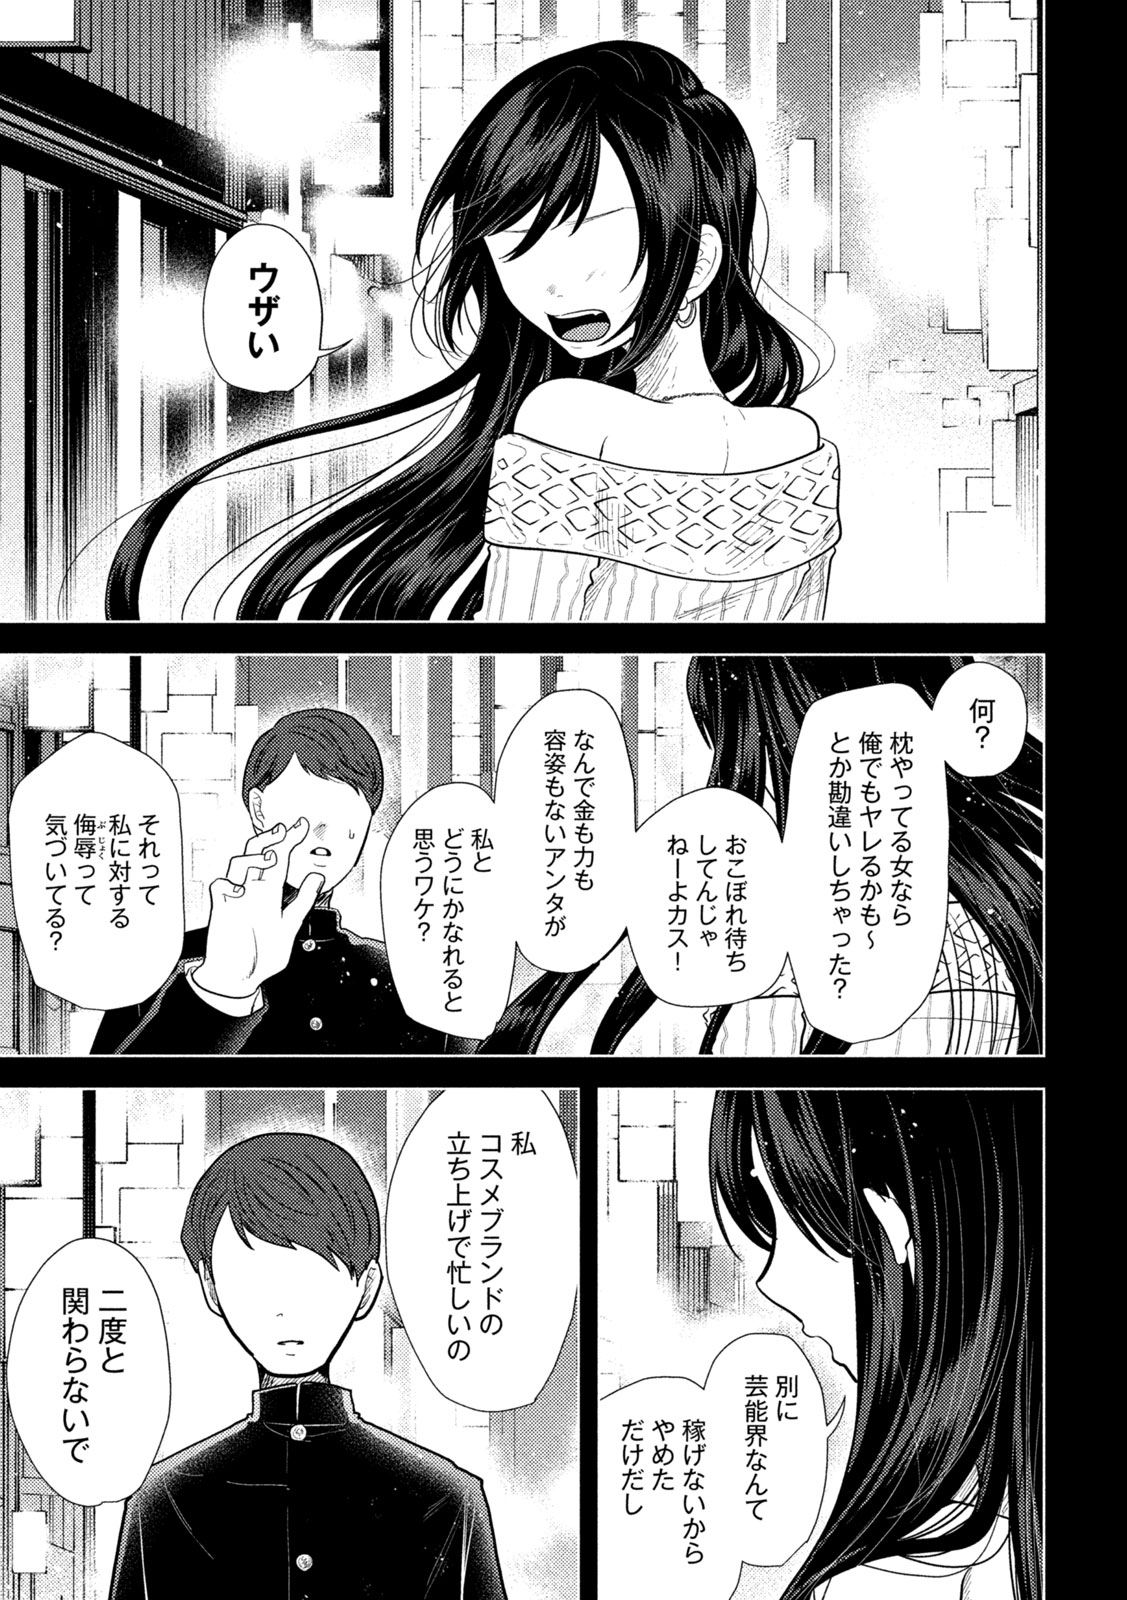 Heisei Haizanhei Sumire-chan - Chapter 25 - Page 3